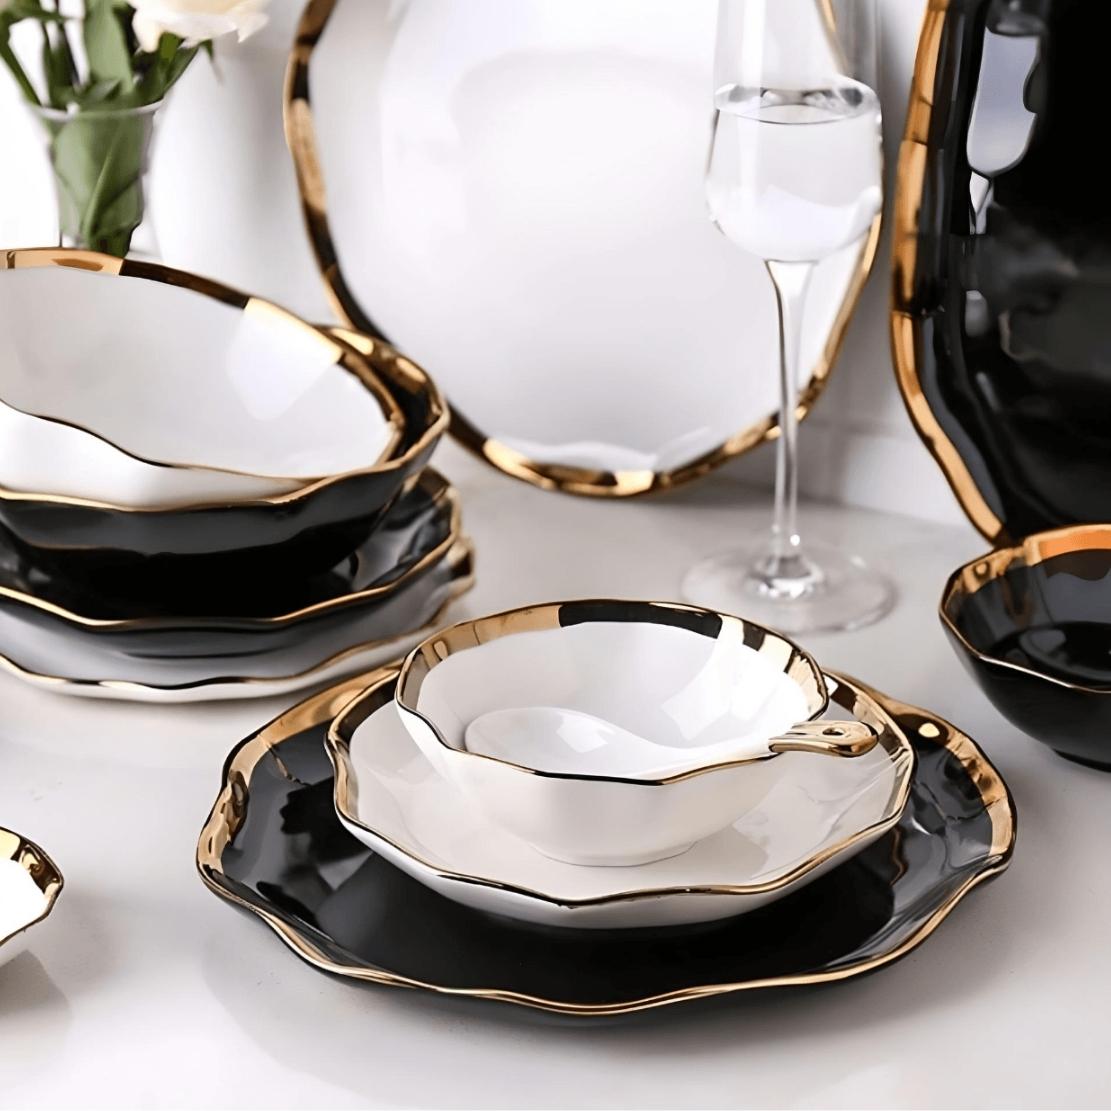 Elegant dining ware / Black white porcelain plates with god rim